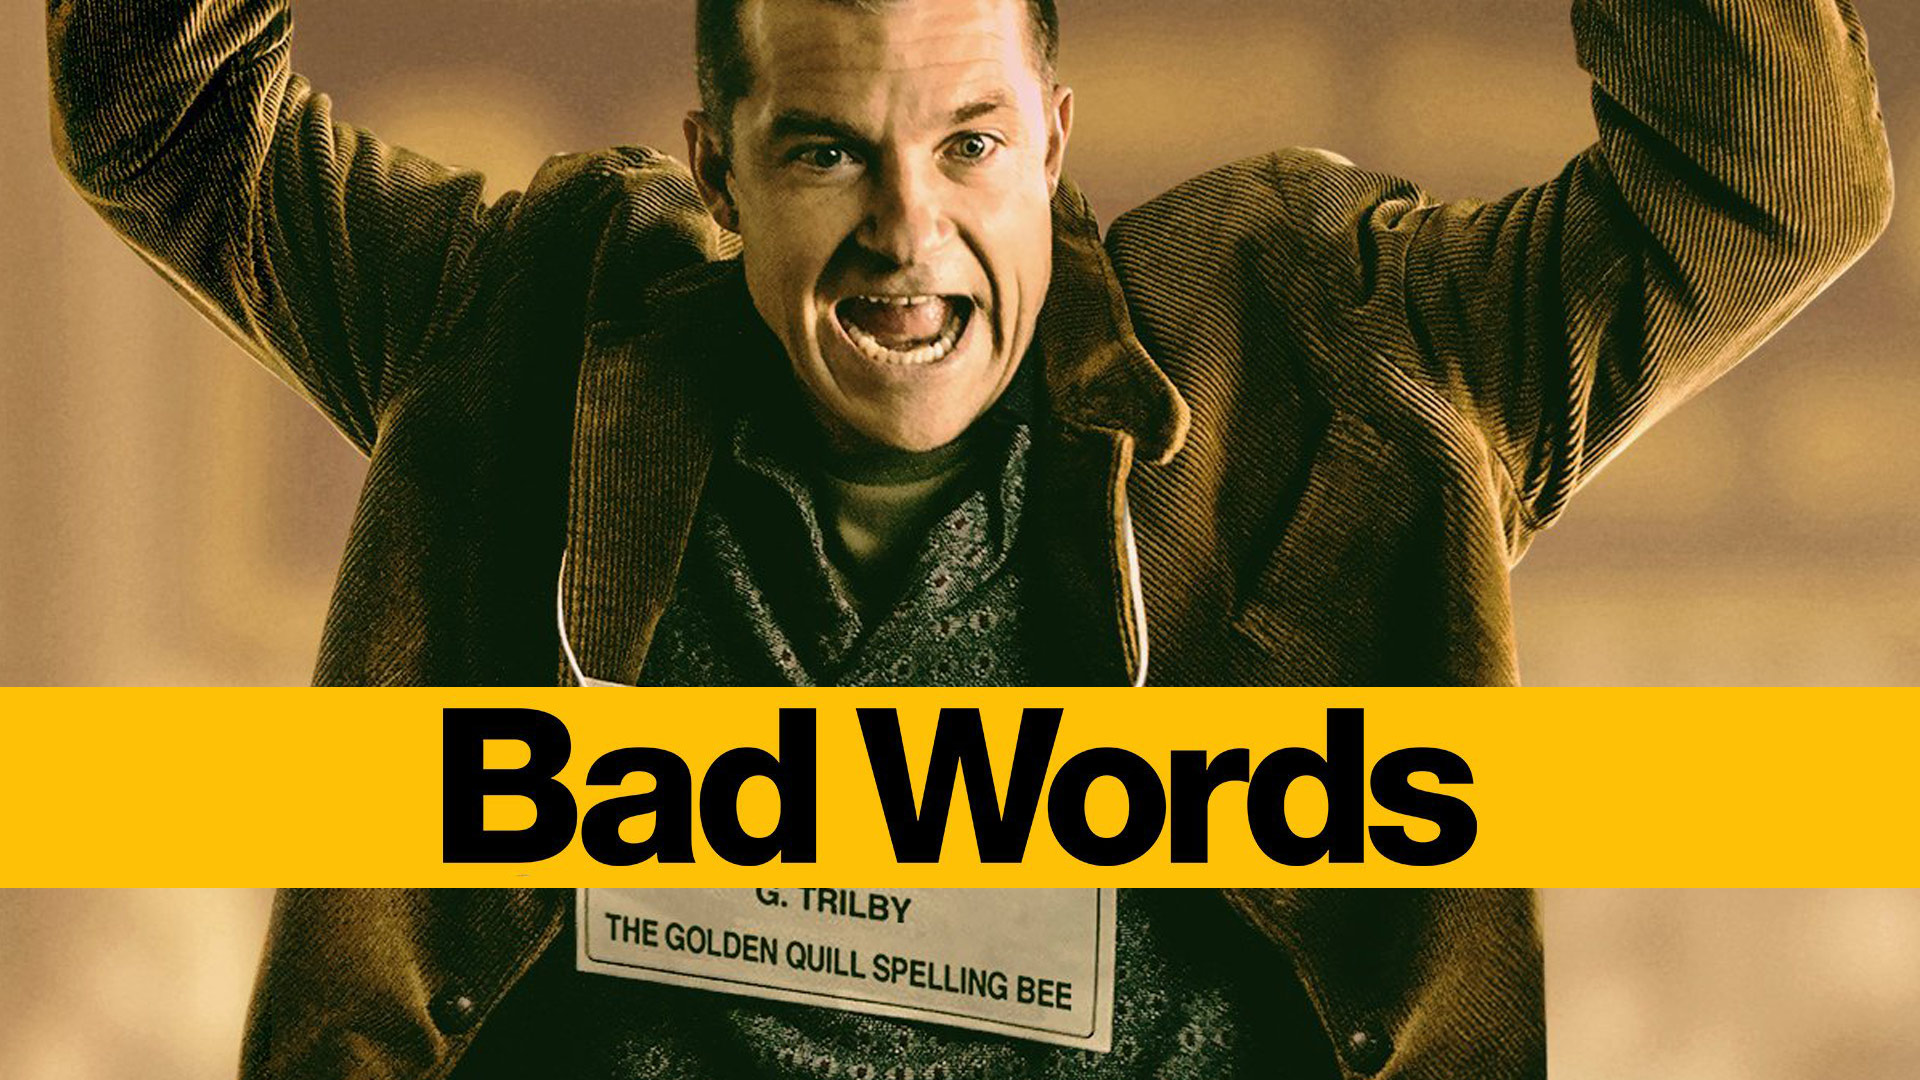 BAD WORDS